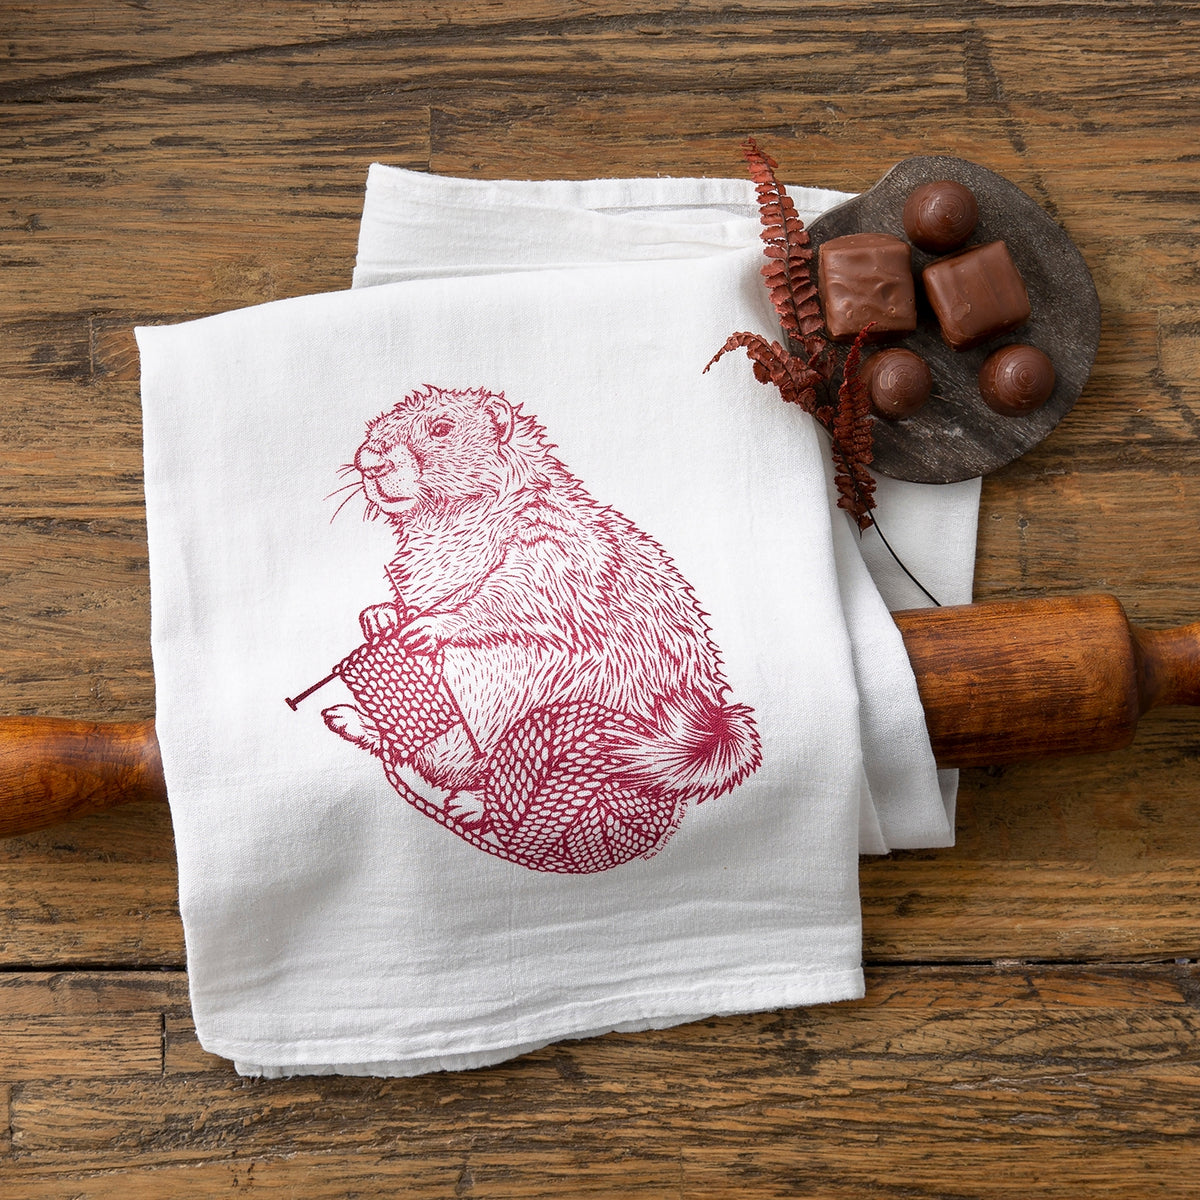 Tea Towels :: Assorted Two Little Fruit Artwork Styles